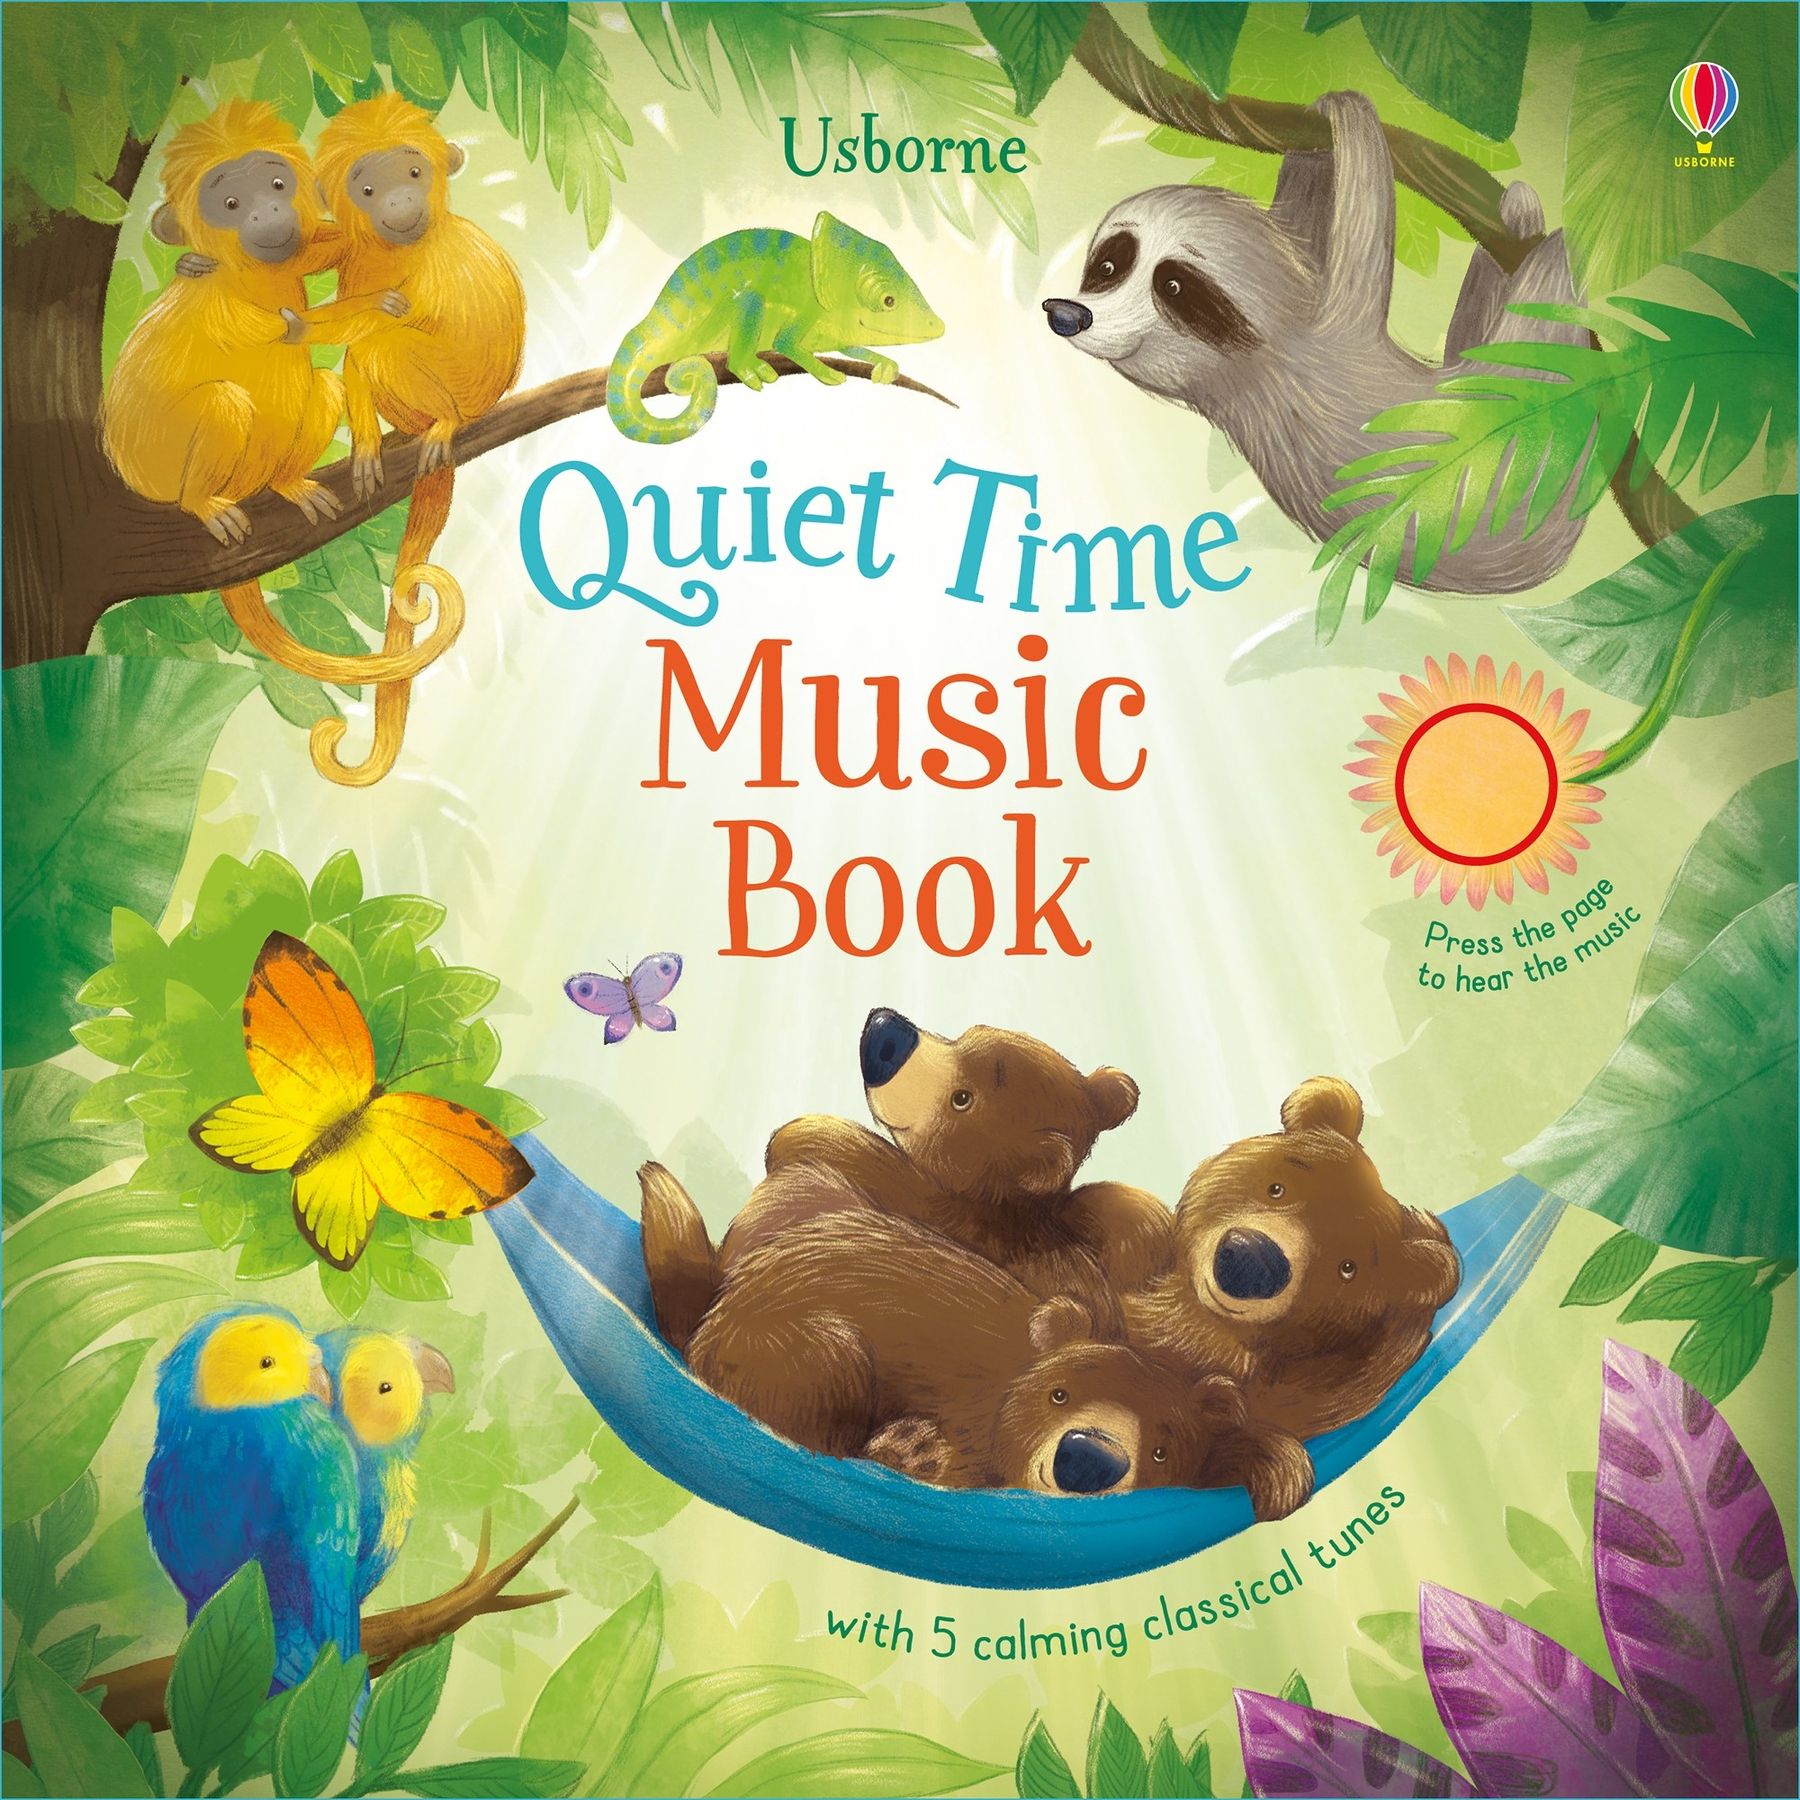 Quiet Time Music Book - Sam Taplin, англ. язык (9781474948494) - фото 1